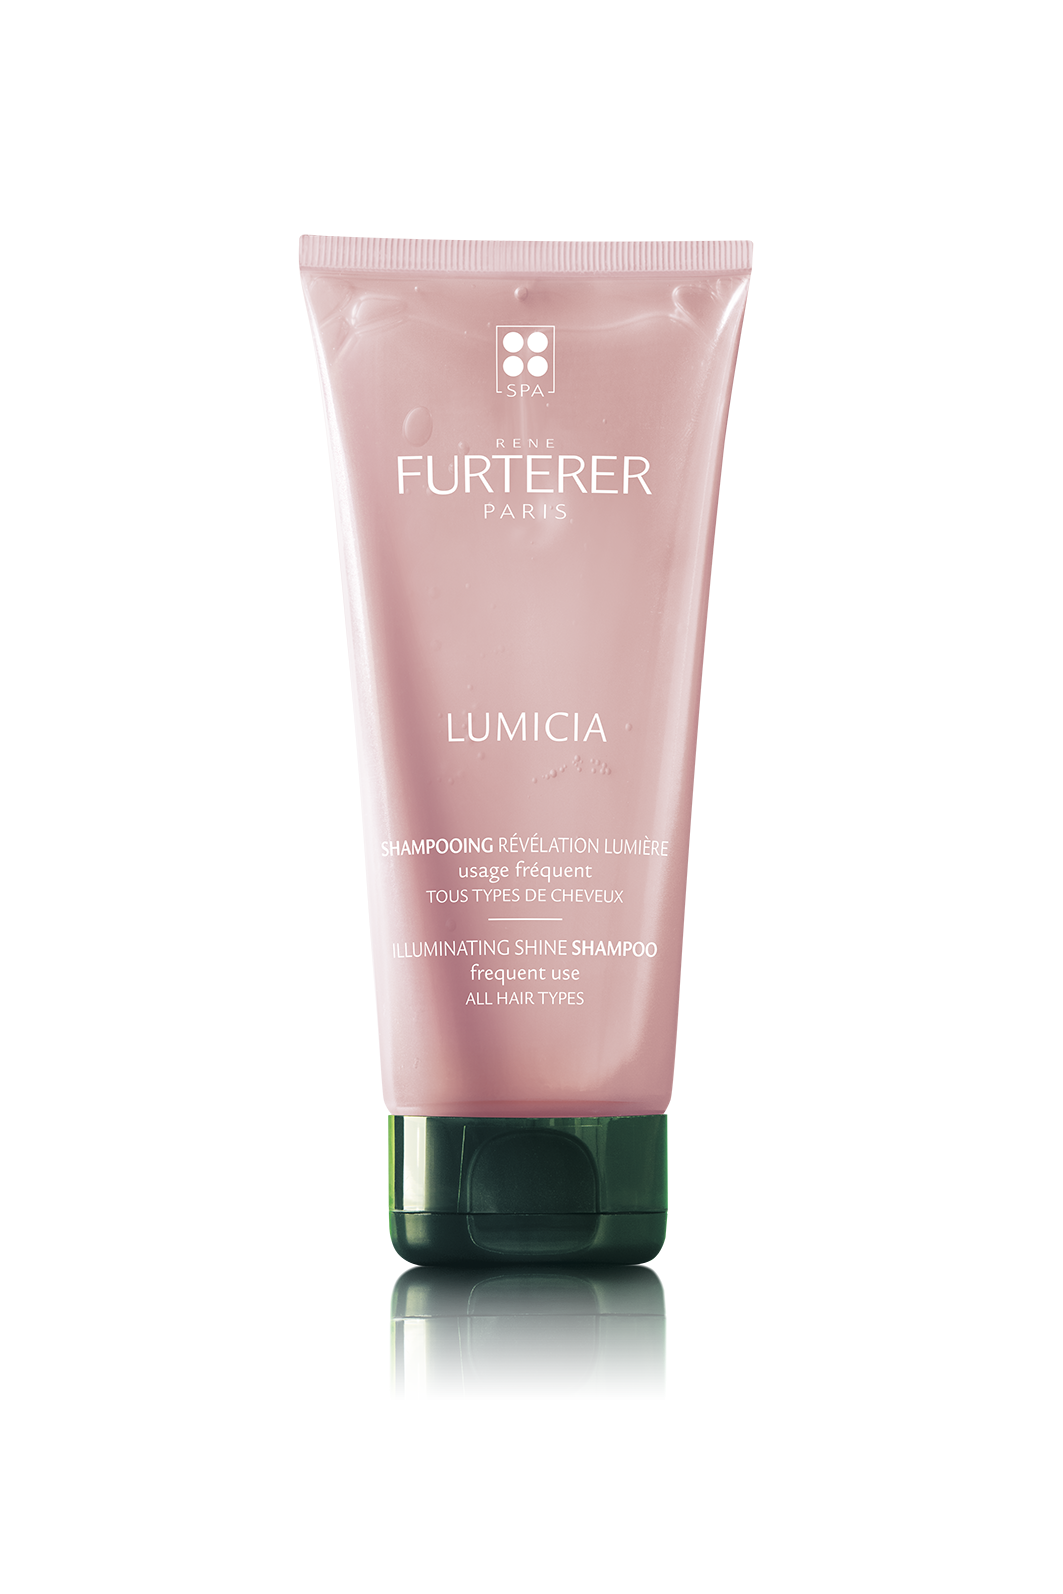 LUMICIA Illuminating shine shampoo René Furterer